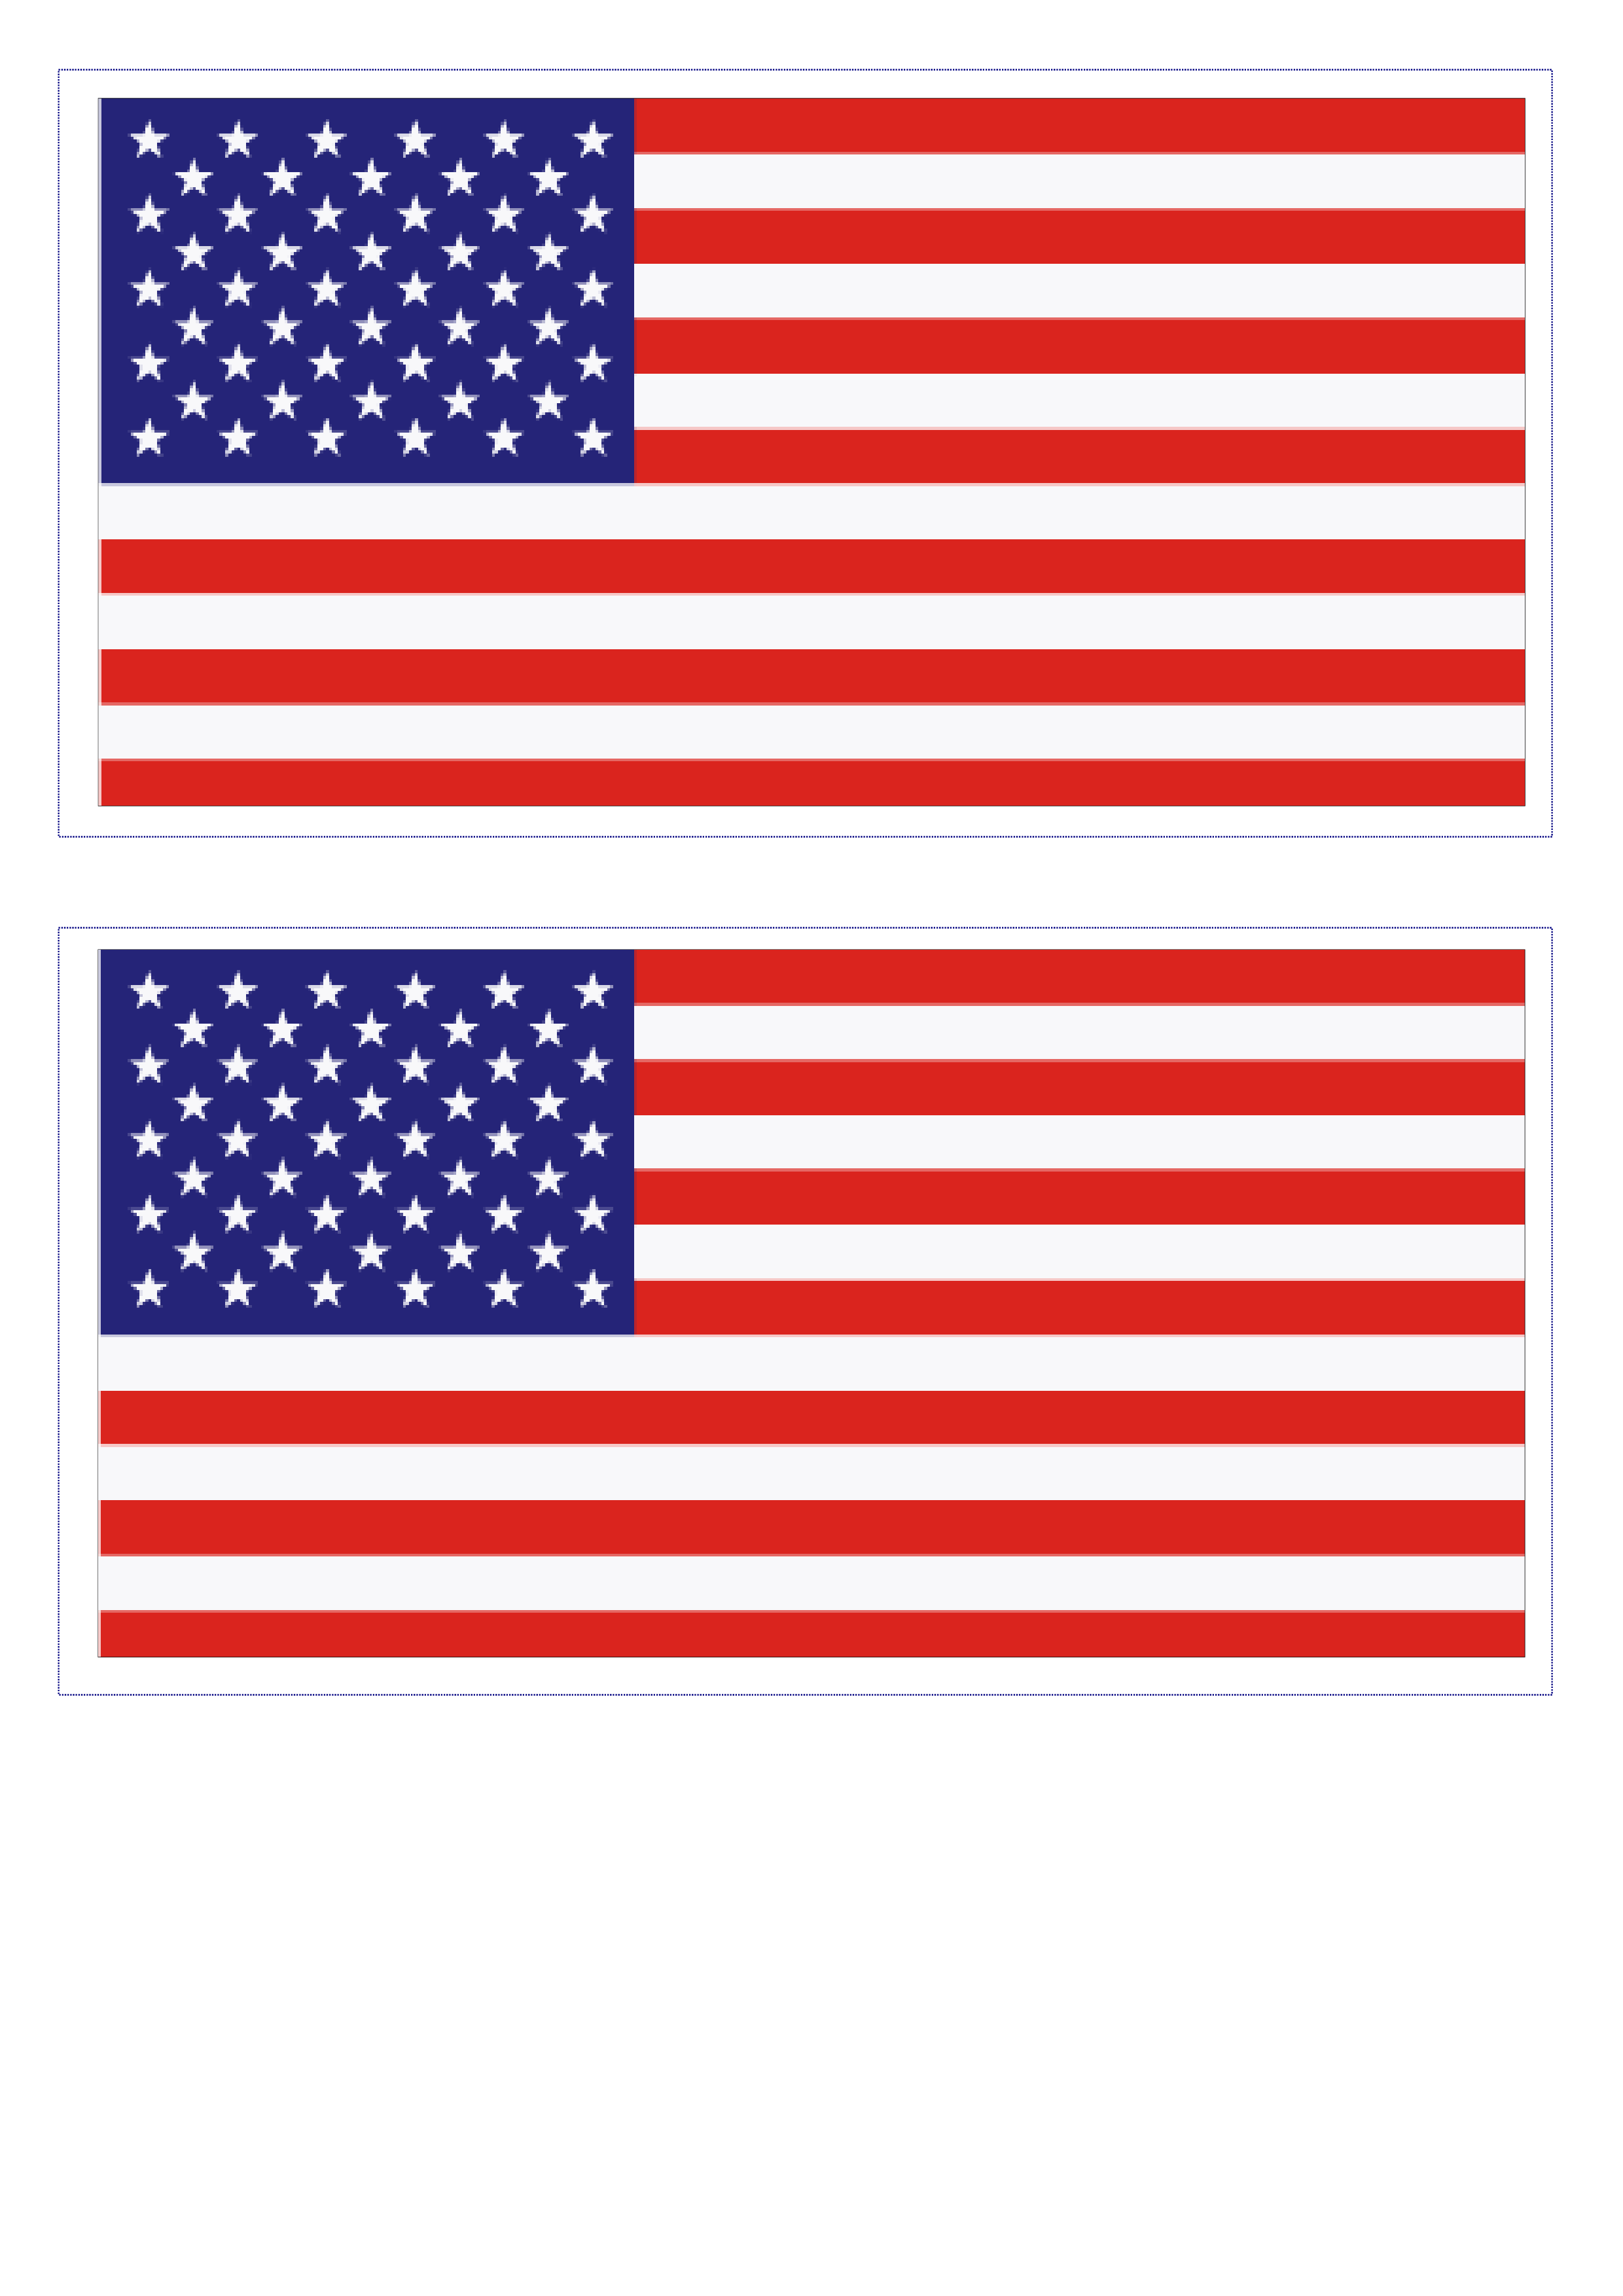 US Stars and Stripes Flag main image